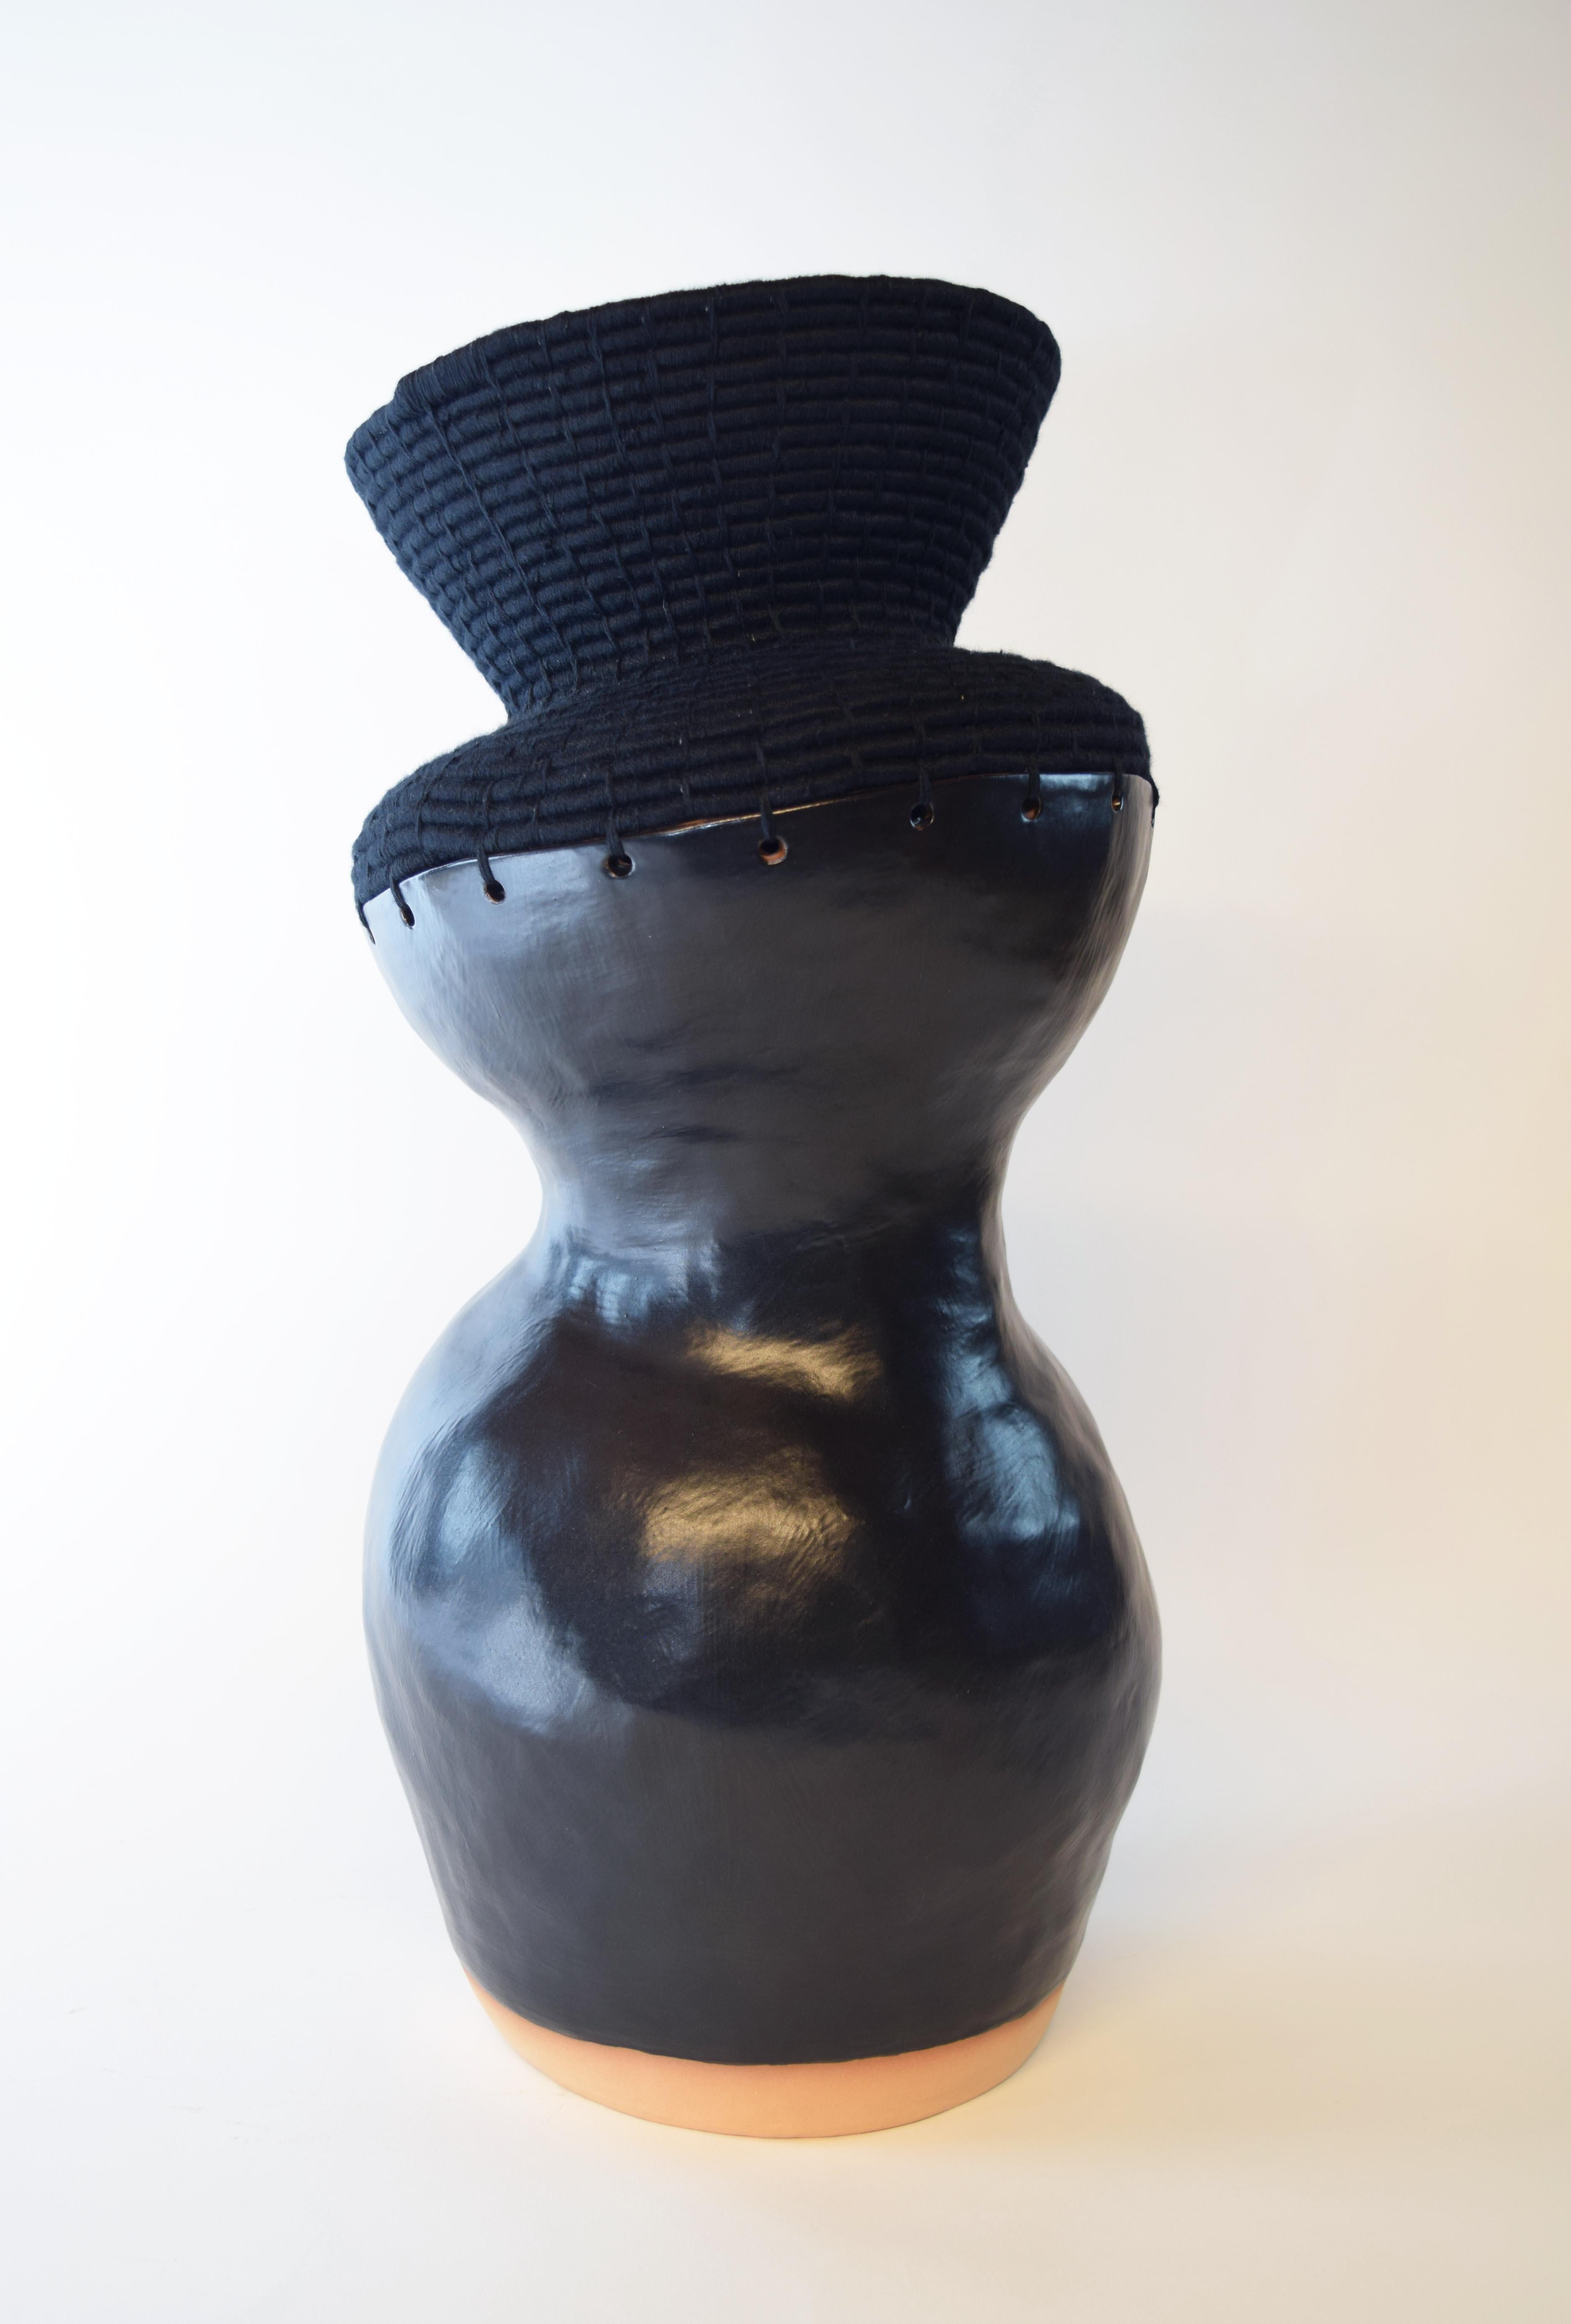 American One of a Kind Ceramic & Woven Fiber Vessel #761, Satin Black Glaze, Black Cotton